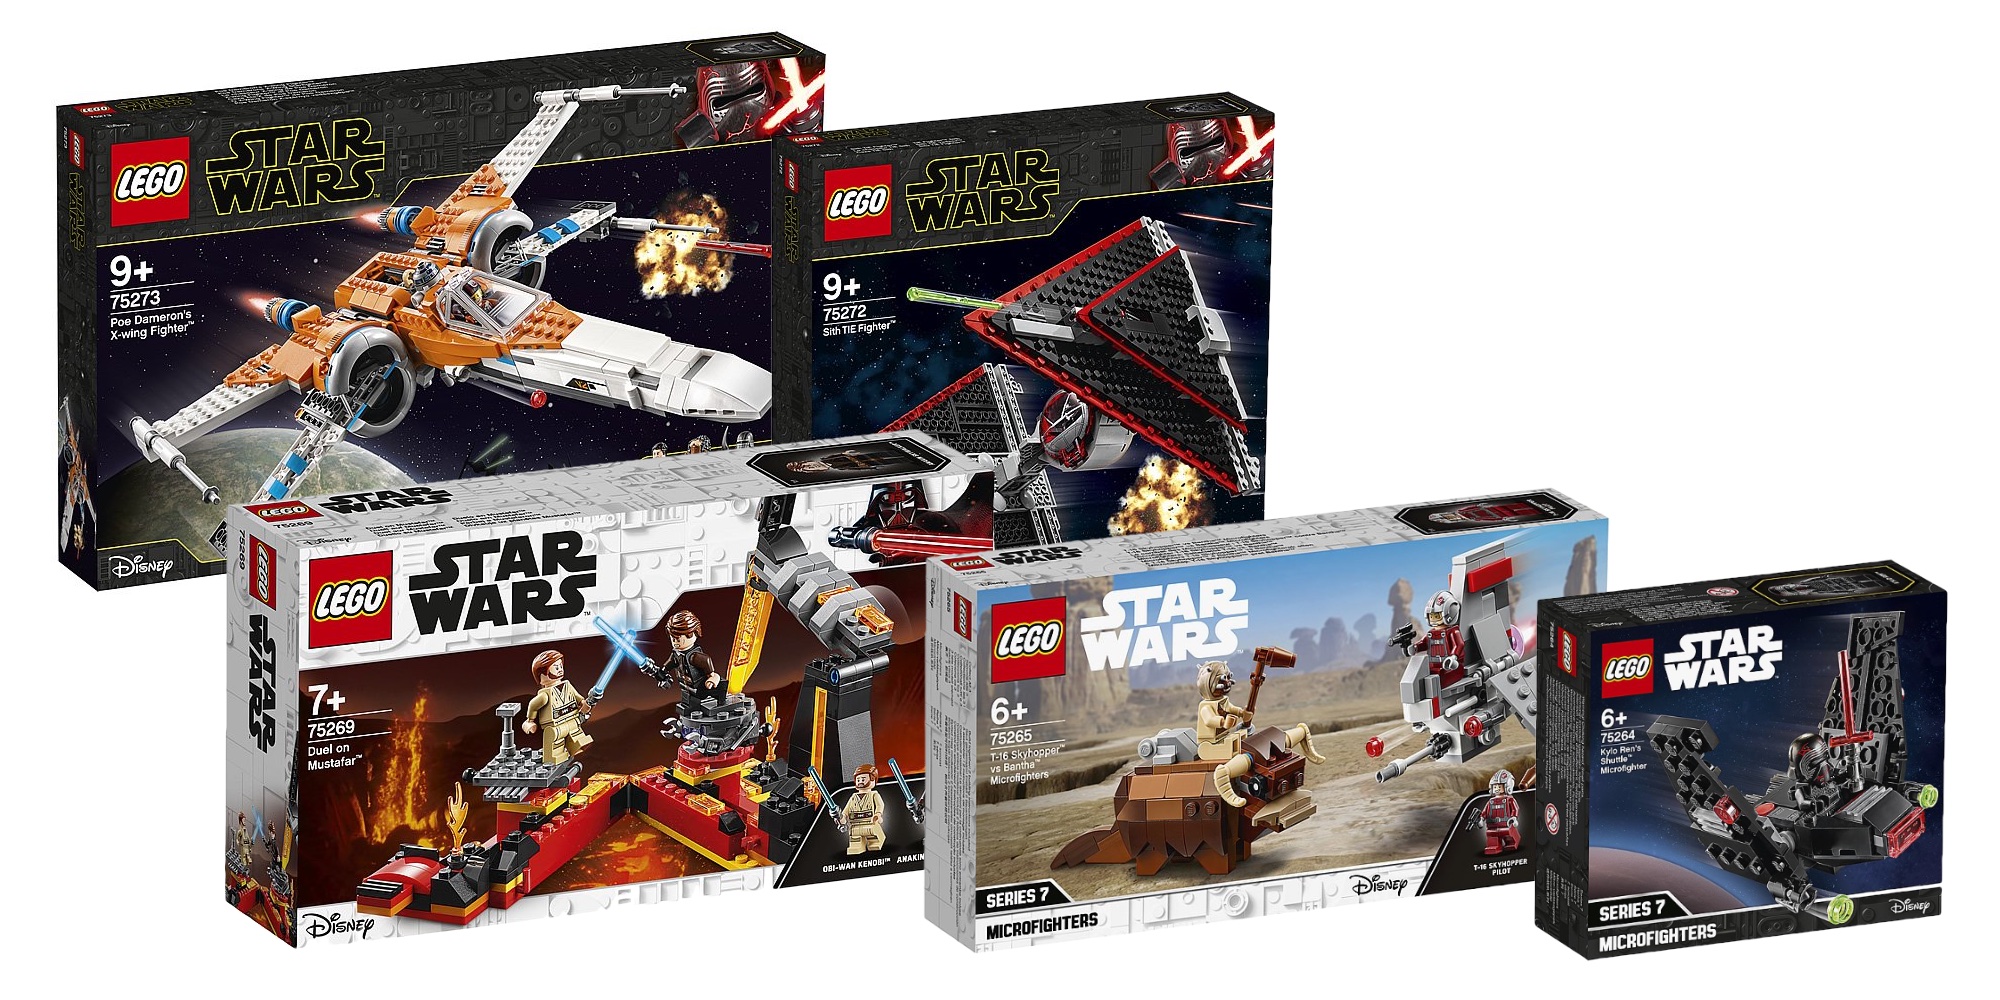 2019 star wars lego sets